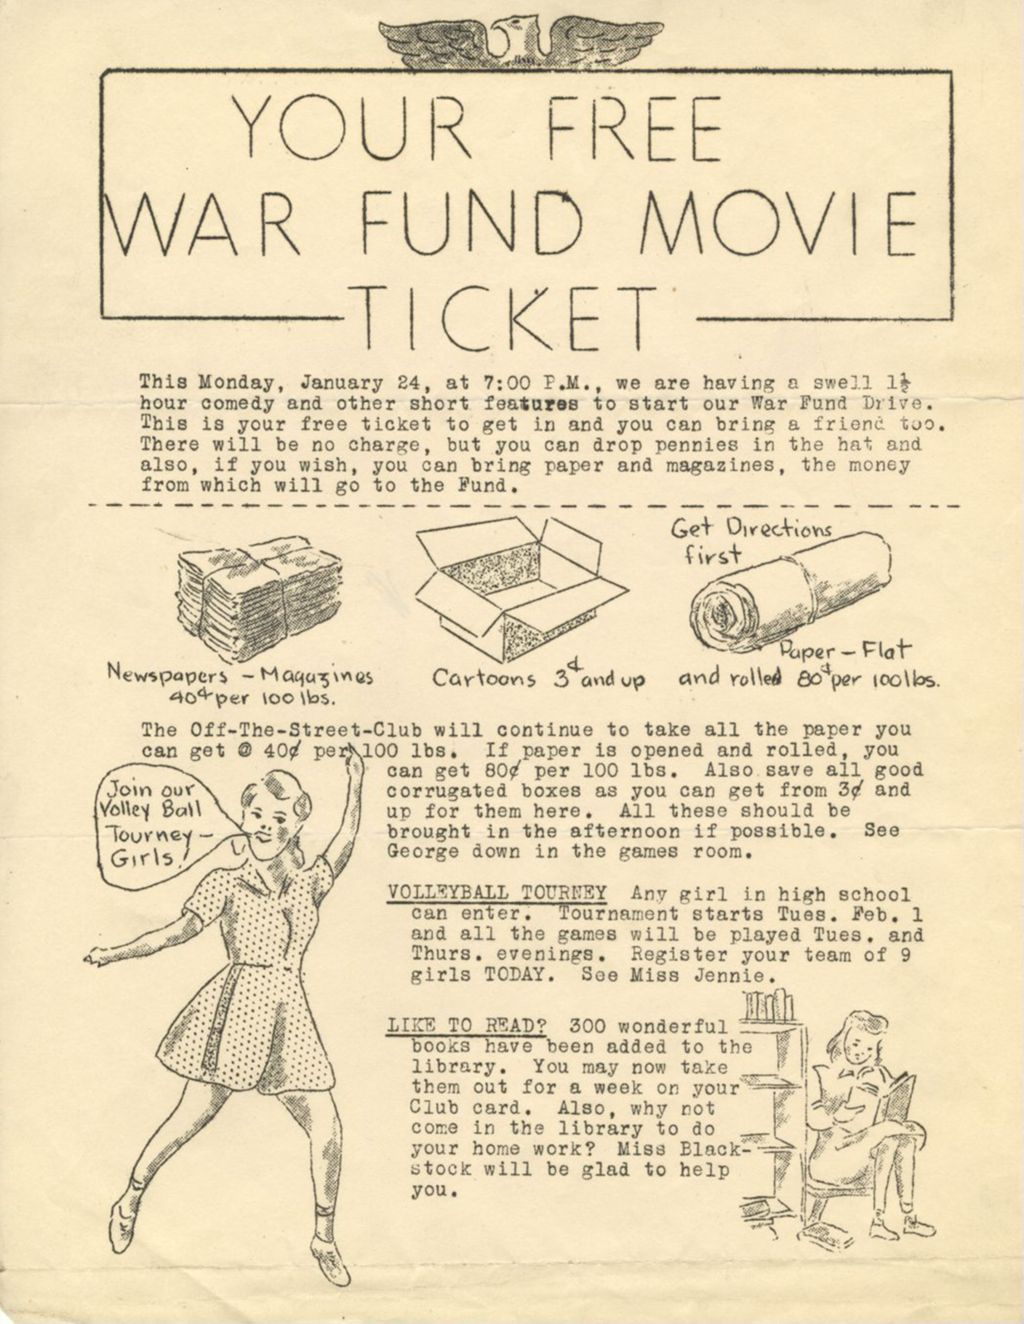 Off-The-Street Club flyer with free War Fund movie ticket